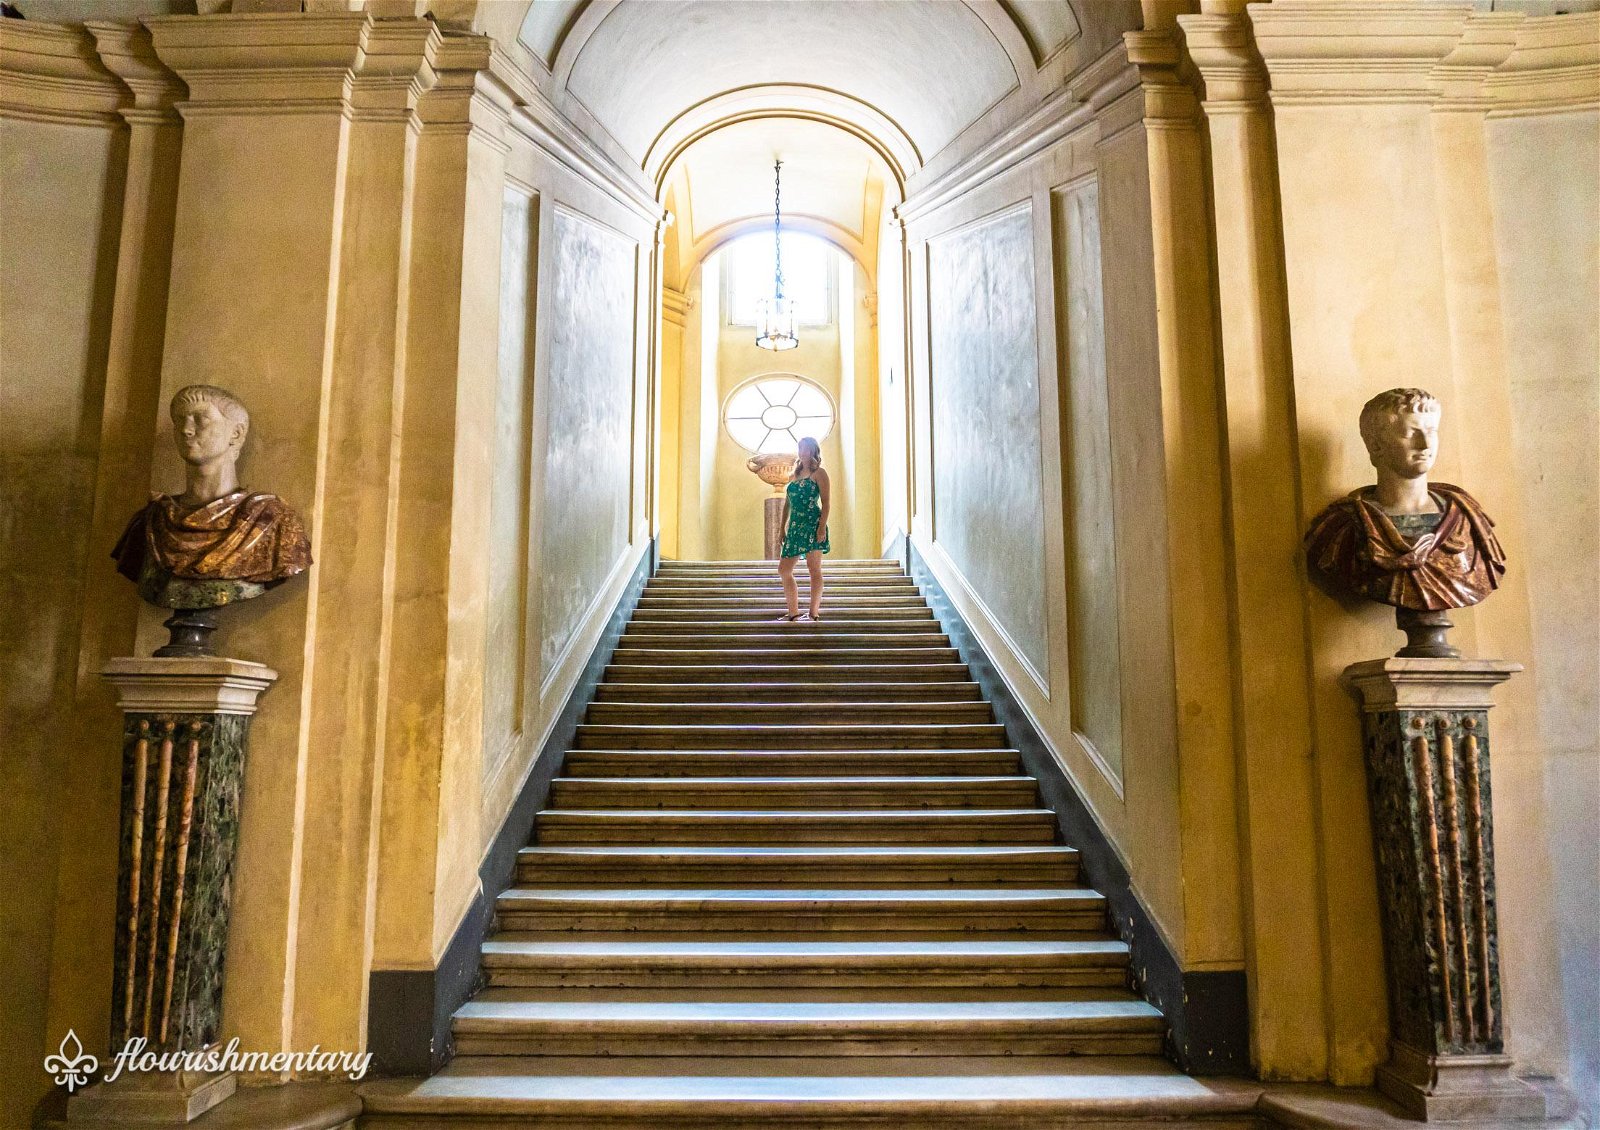 the entryway Doria Pamphilj gallery 